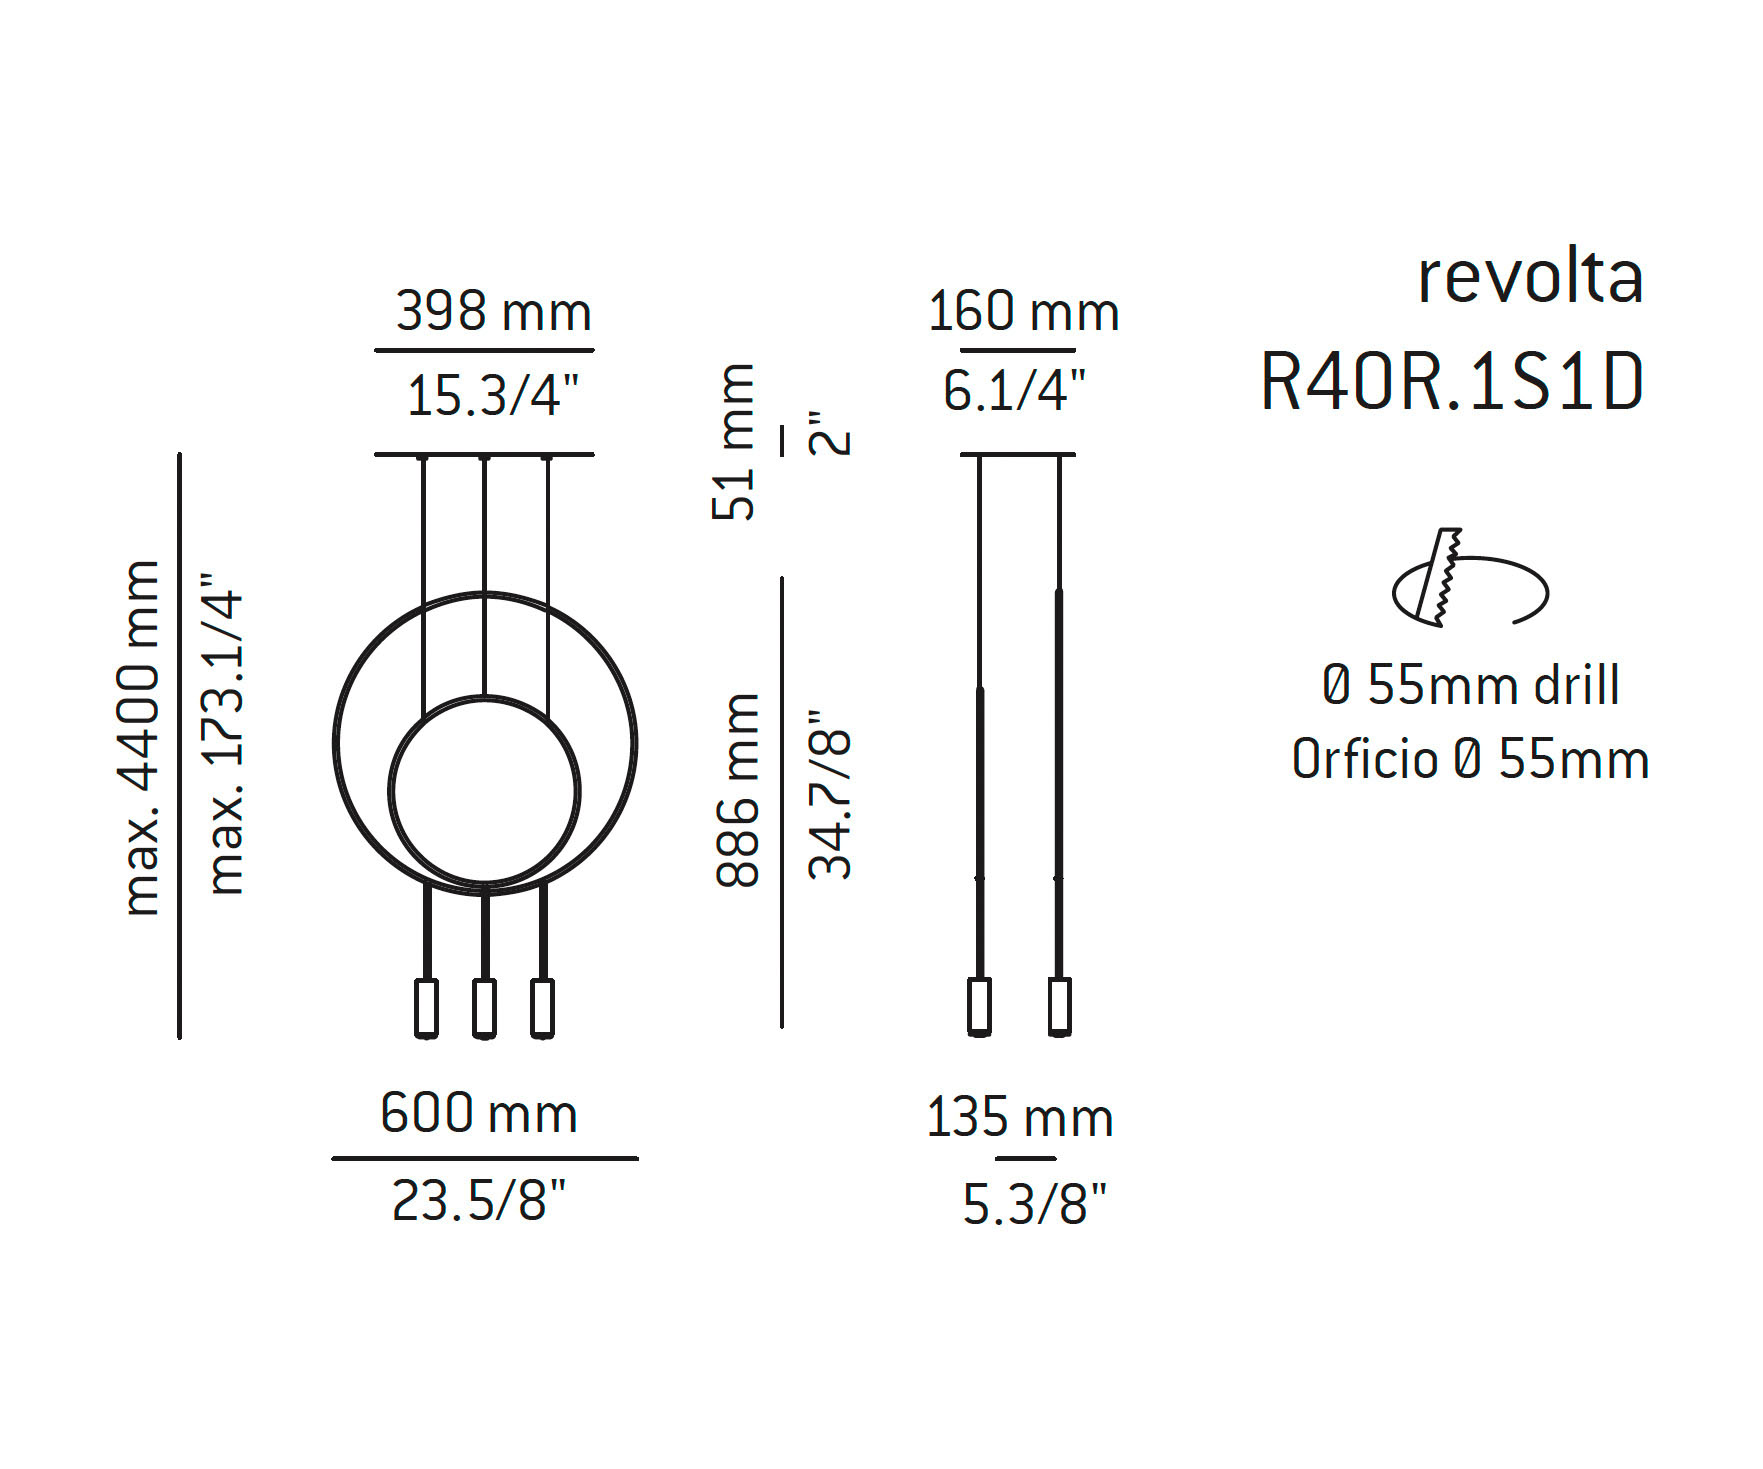 Medidas Revolta modelo R40R.1S1D de suspensión de Estiluz